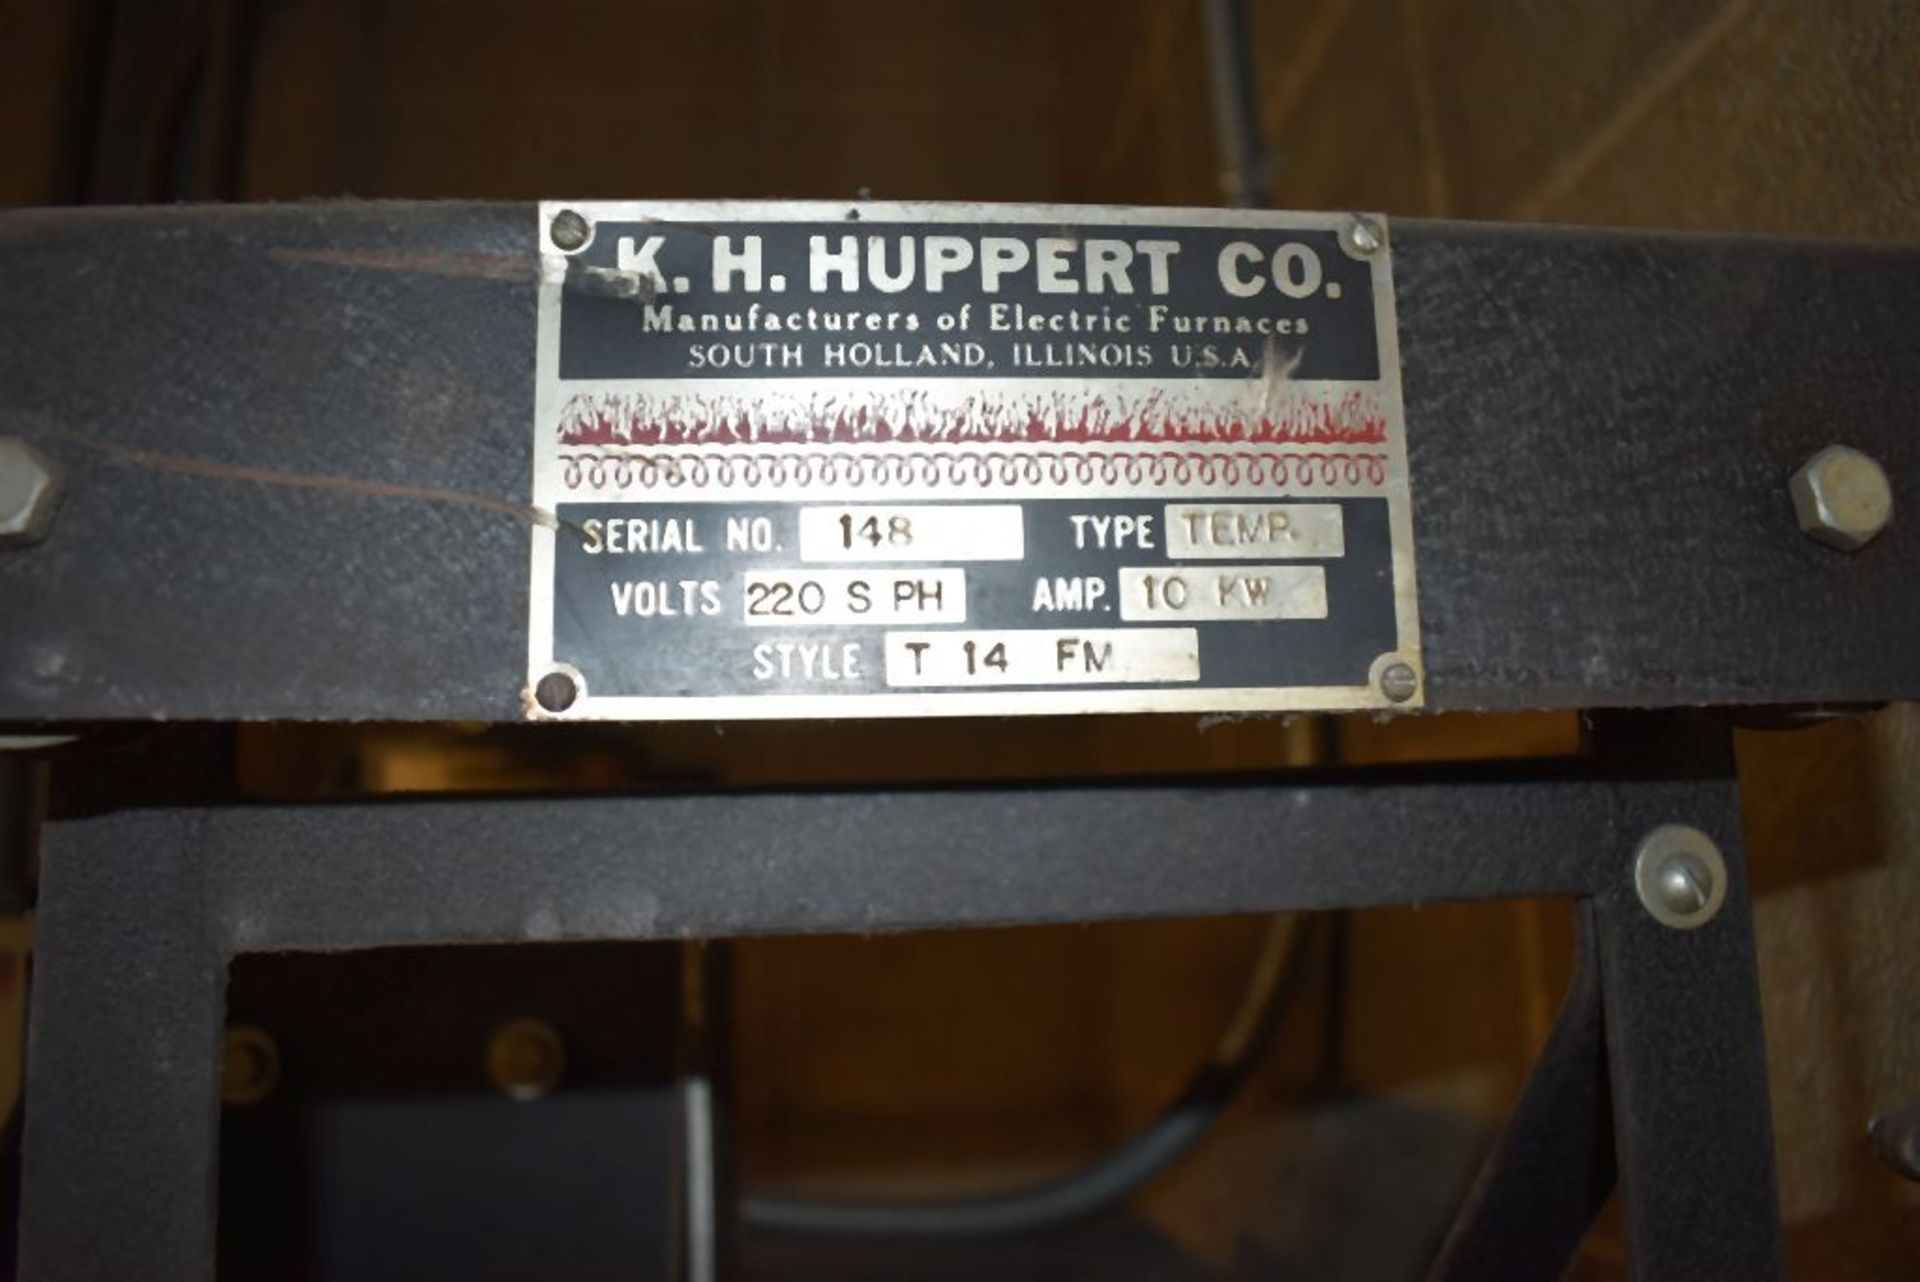 K.H. HUPPERT HEAT TREAT OVEN, MODEL T-14-FM, S/N: 148, 10KW, 220V SINGLE PHASE, 14"W x 18"D x 8"H - Image 2 of 2